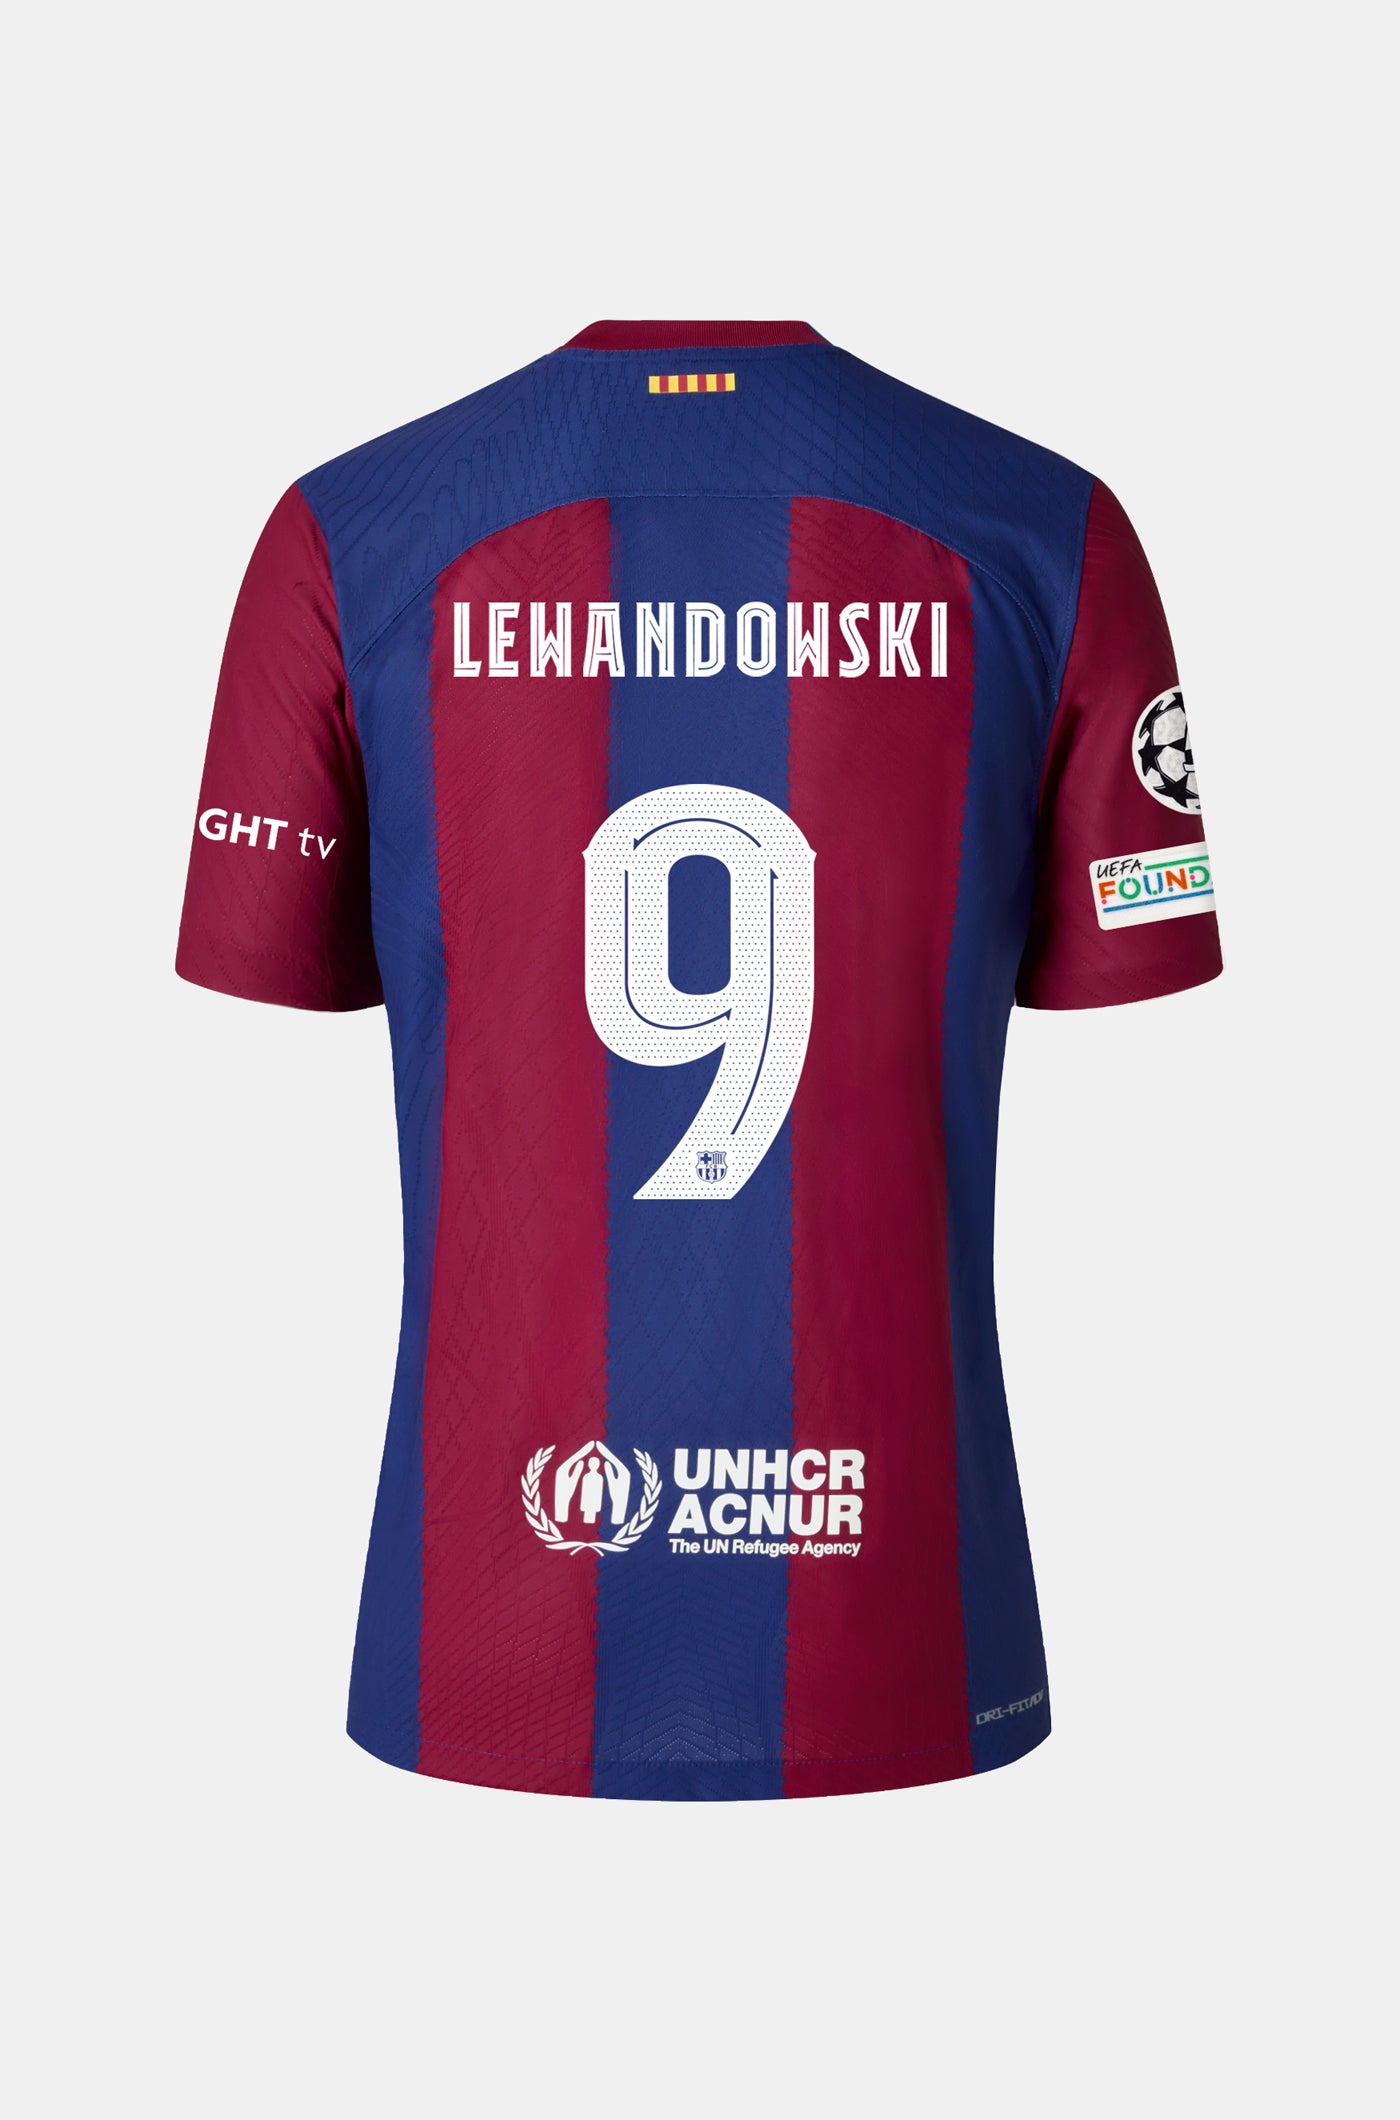 UCL FC Barcelona home shirt 23/24 Player's Edition  - LEWANDOWSKI